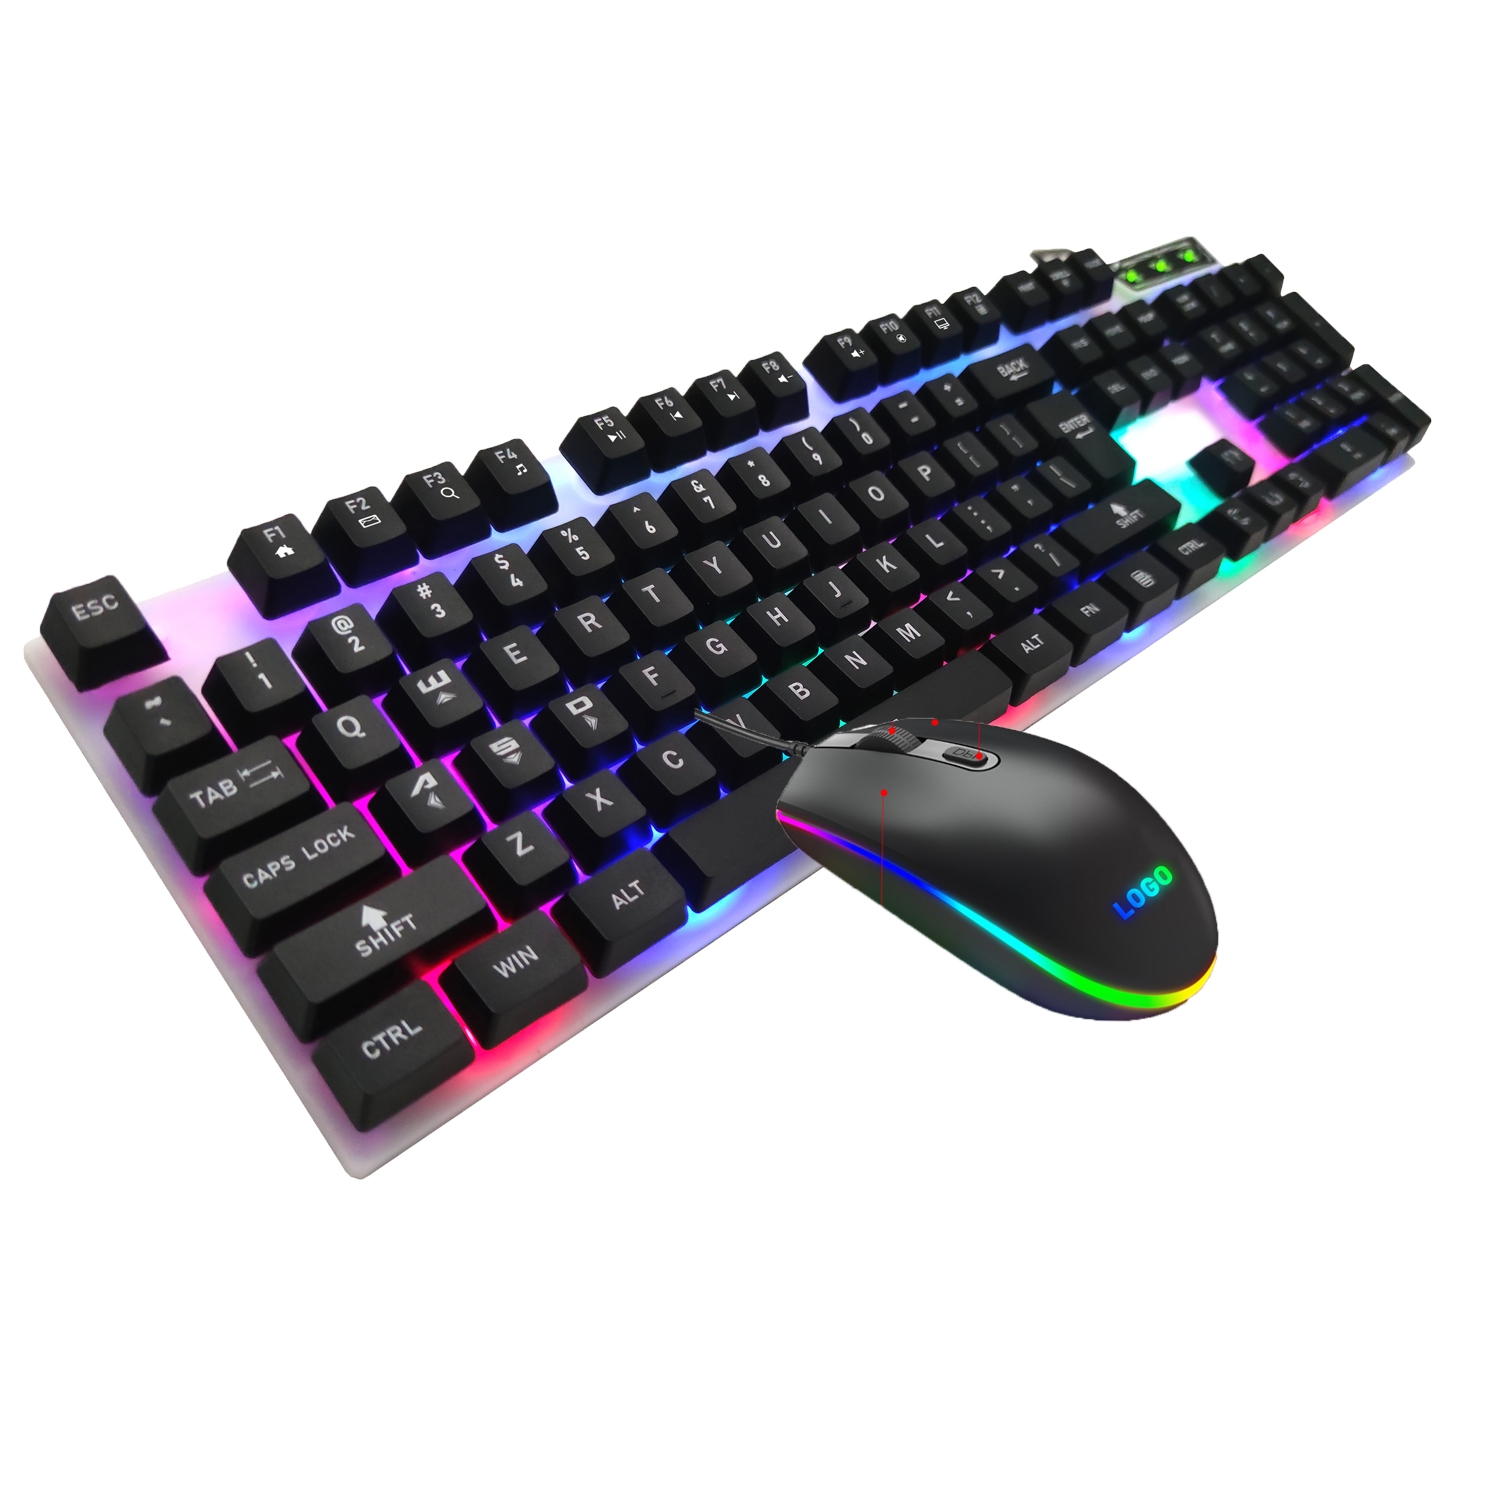 Get custom gaming keyboard from wholesale vendors